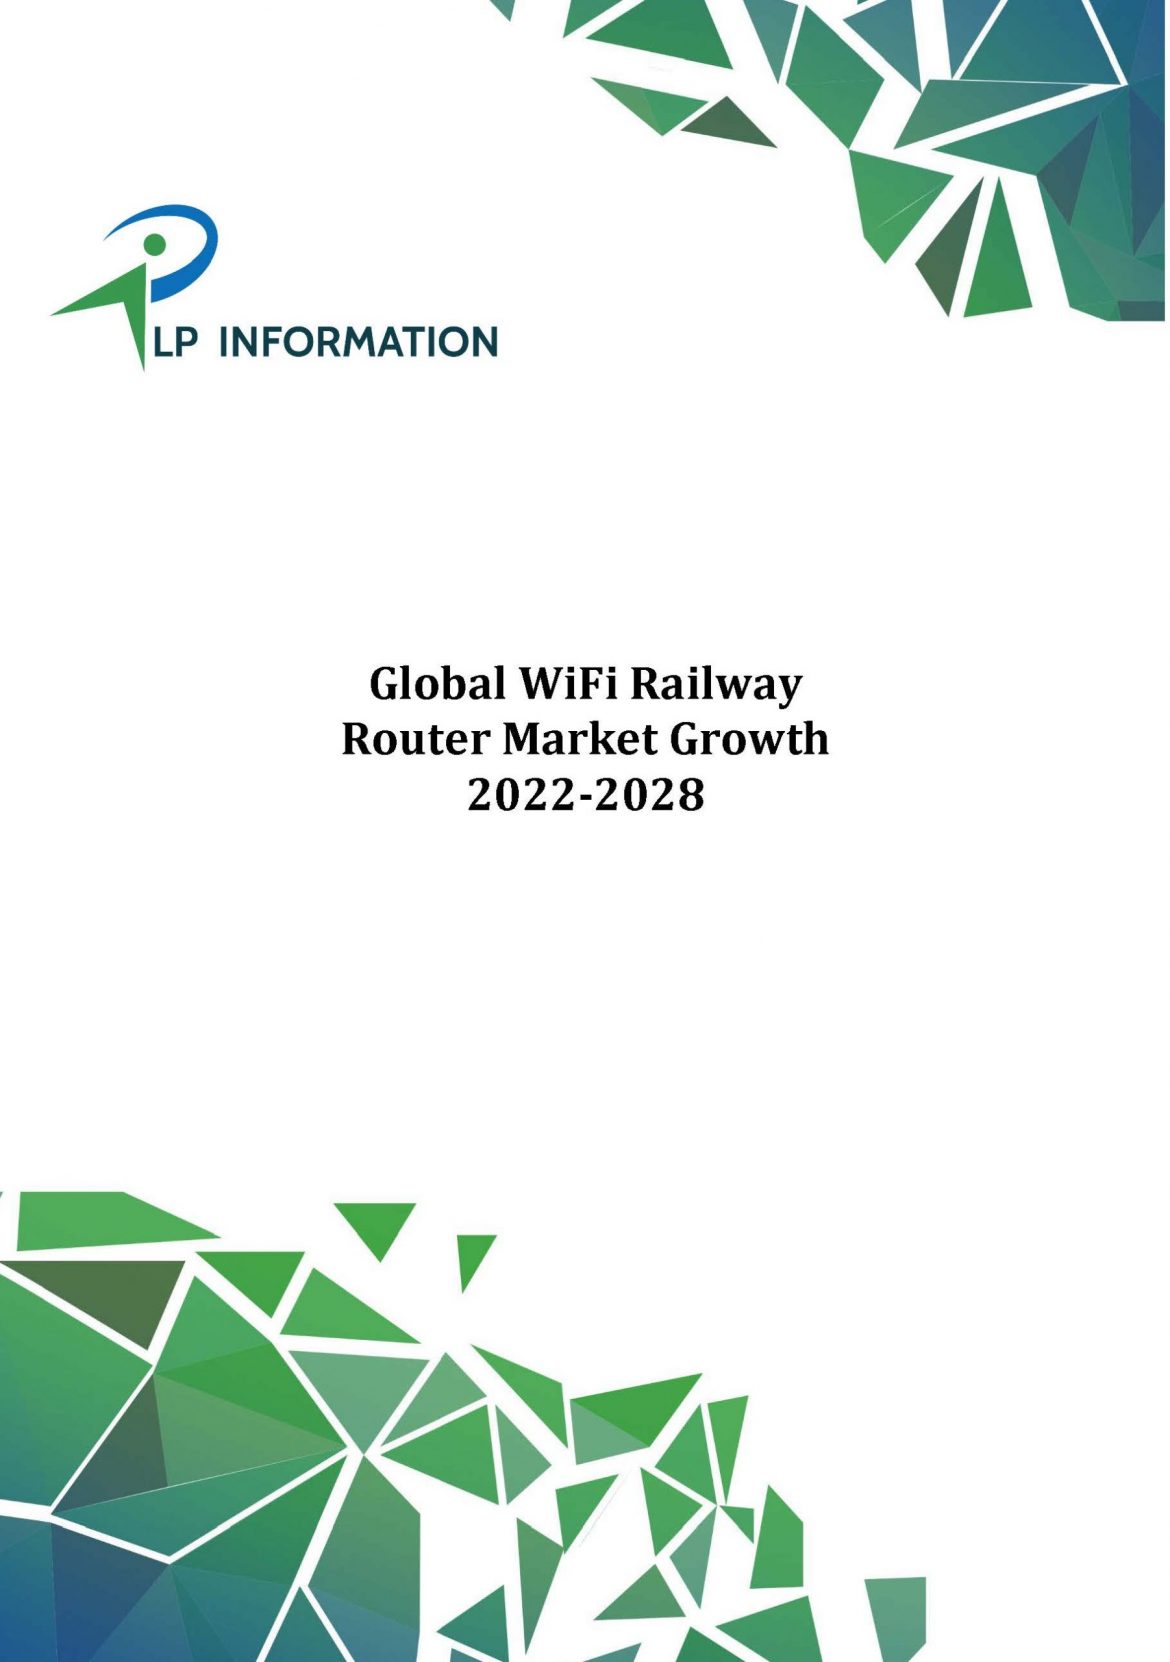 Global WiFi Railway Router Market Growth 2022-2028